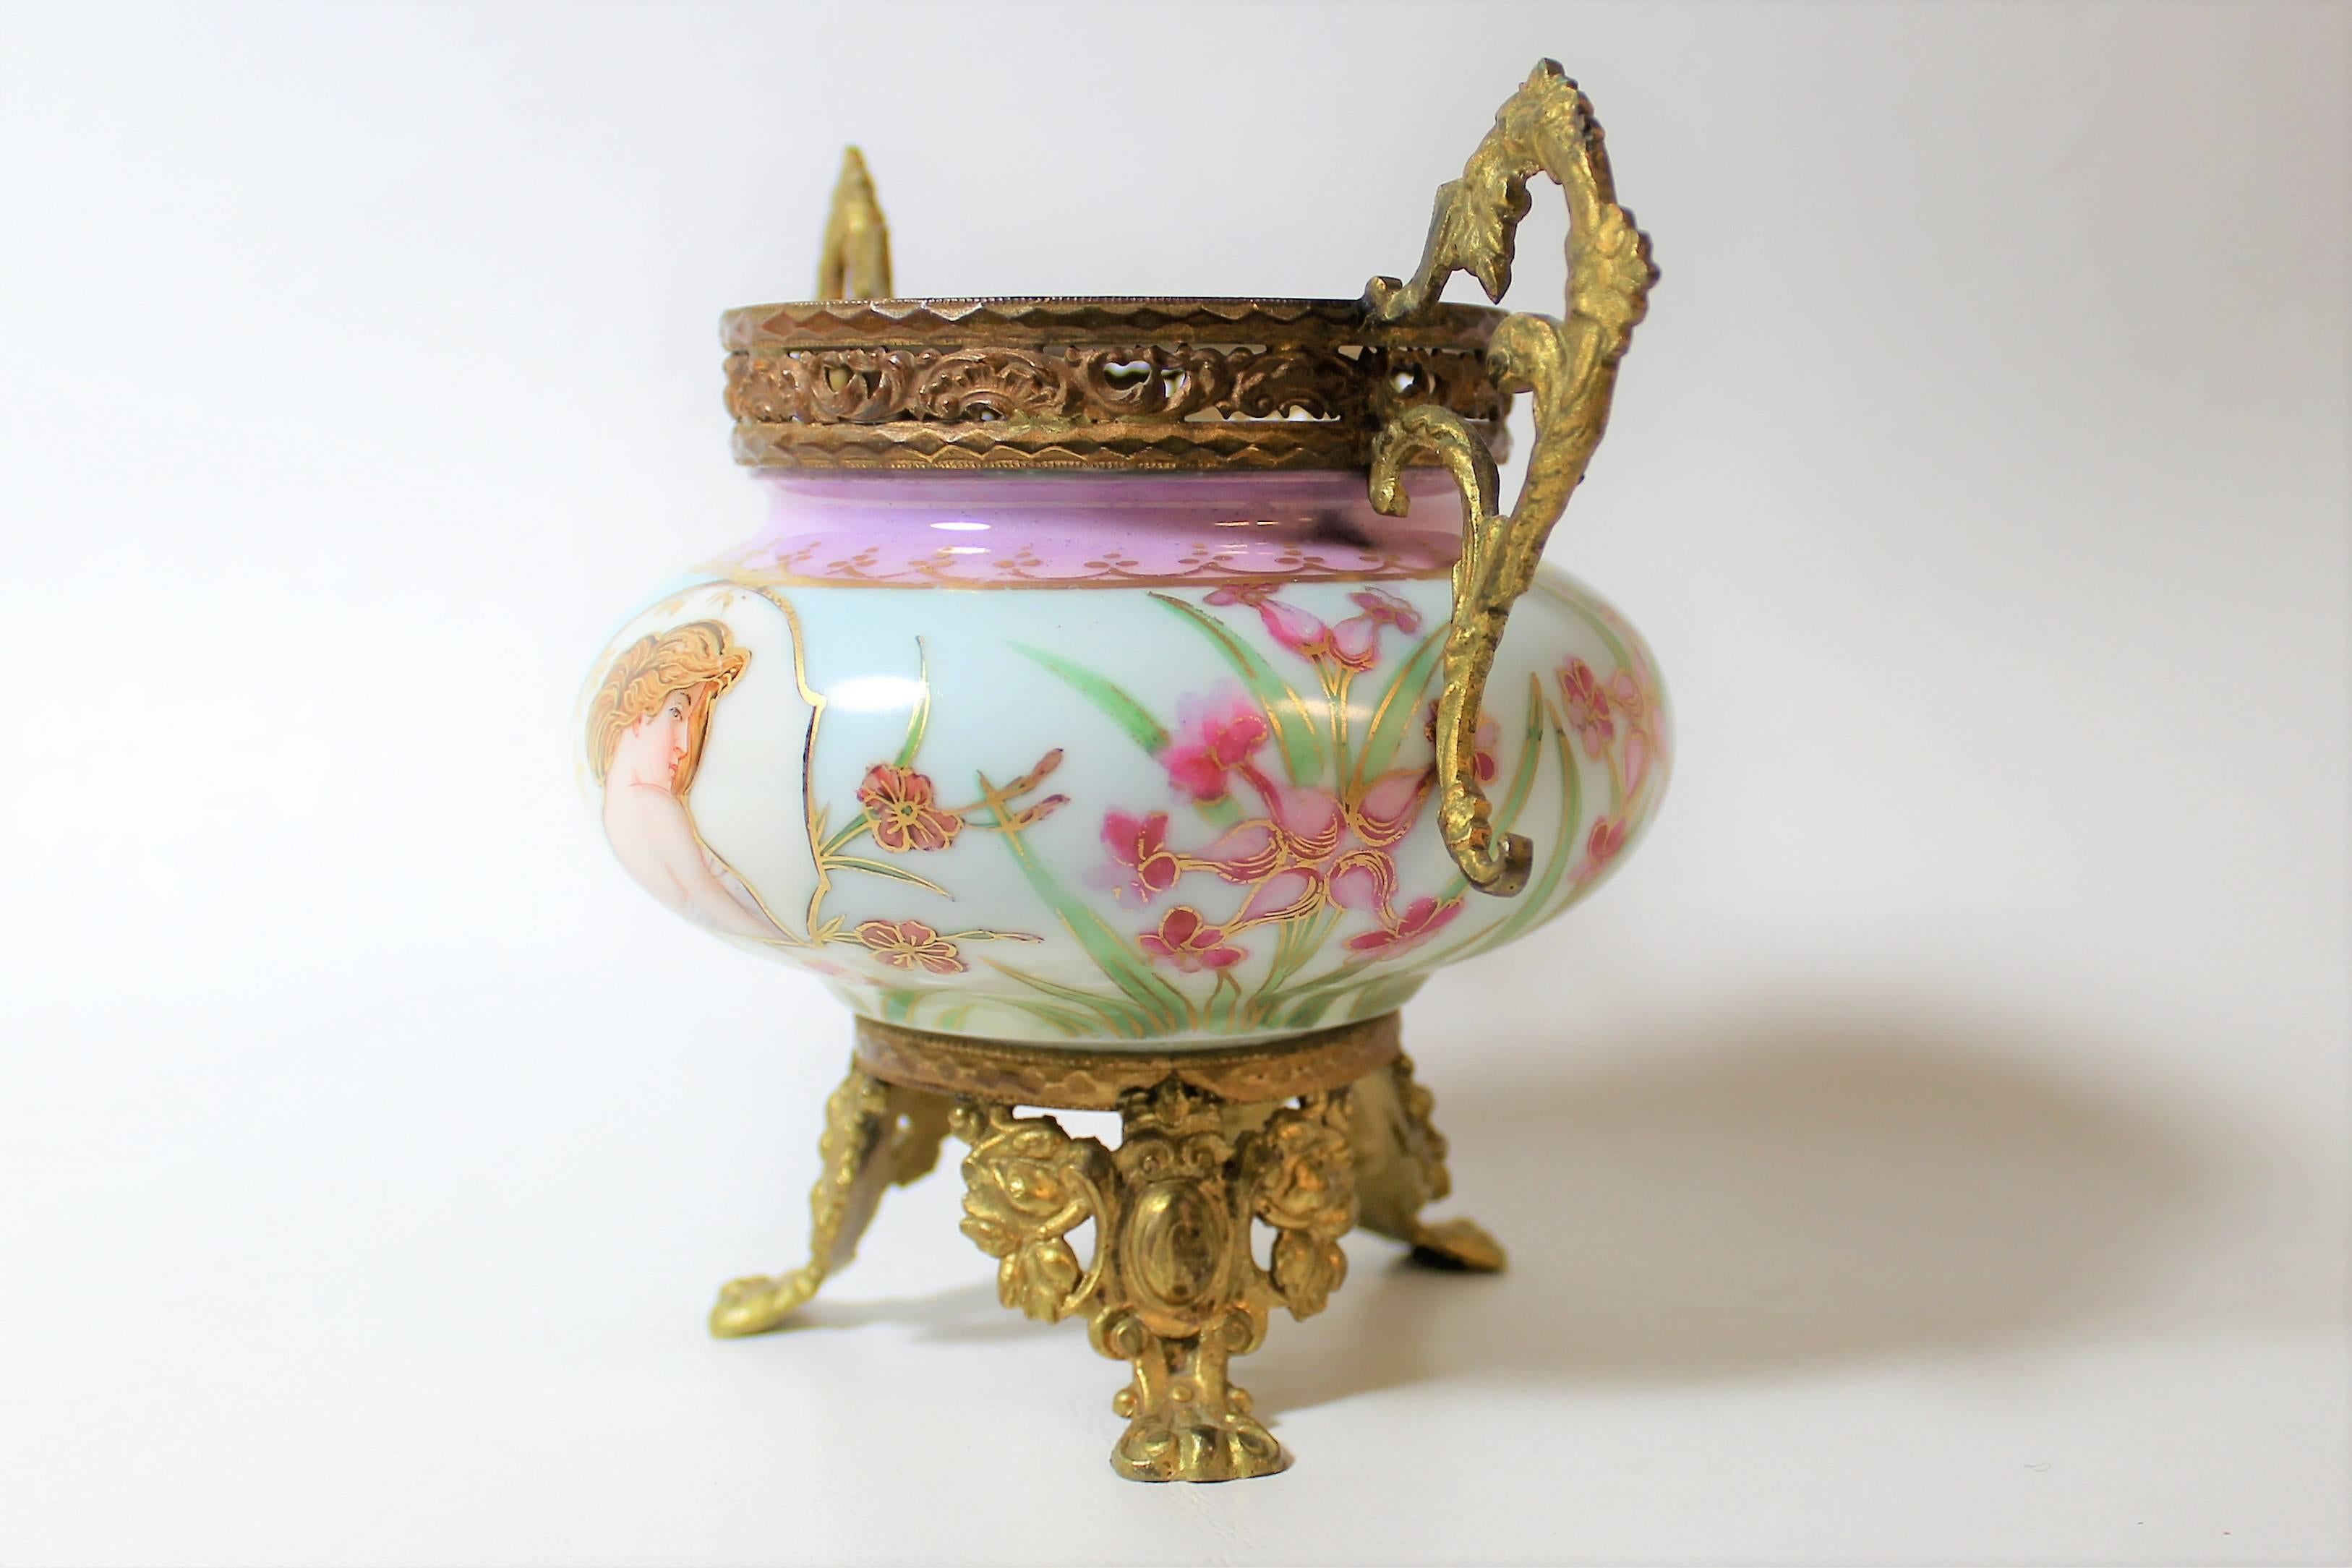 Art Nouveau French porcelain ormolu-mounted urn.